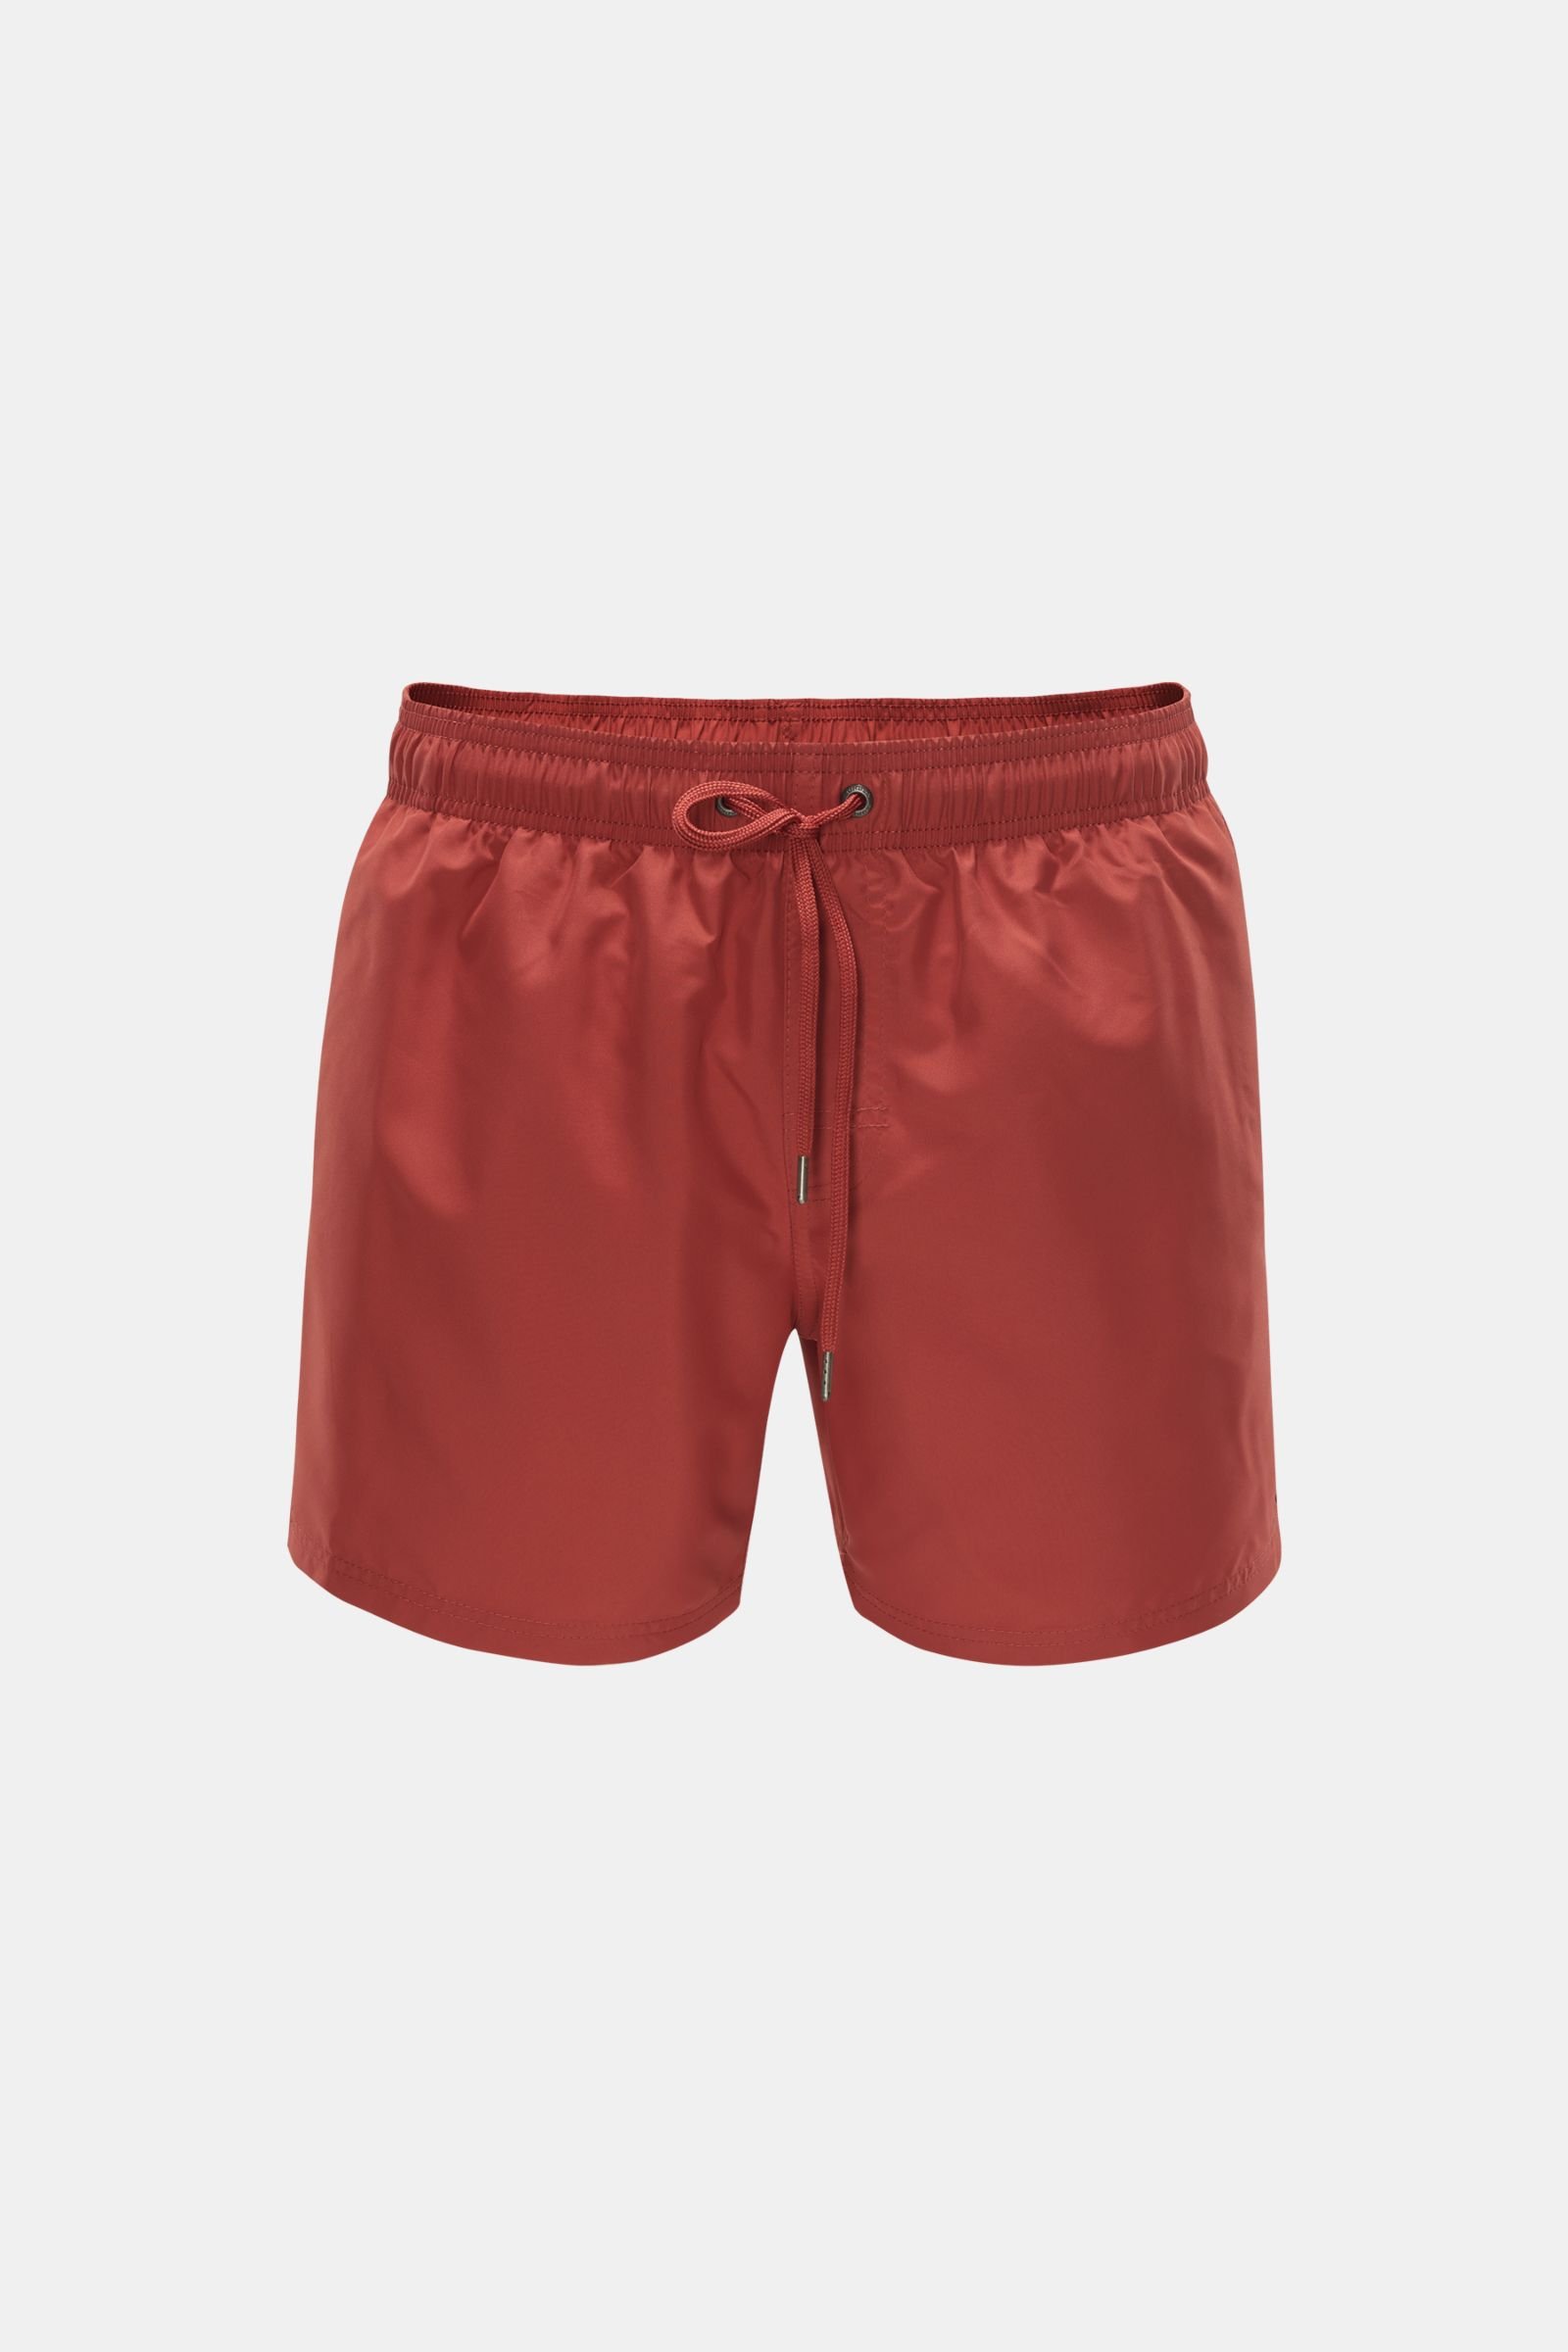 Swim shorts red brown